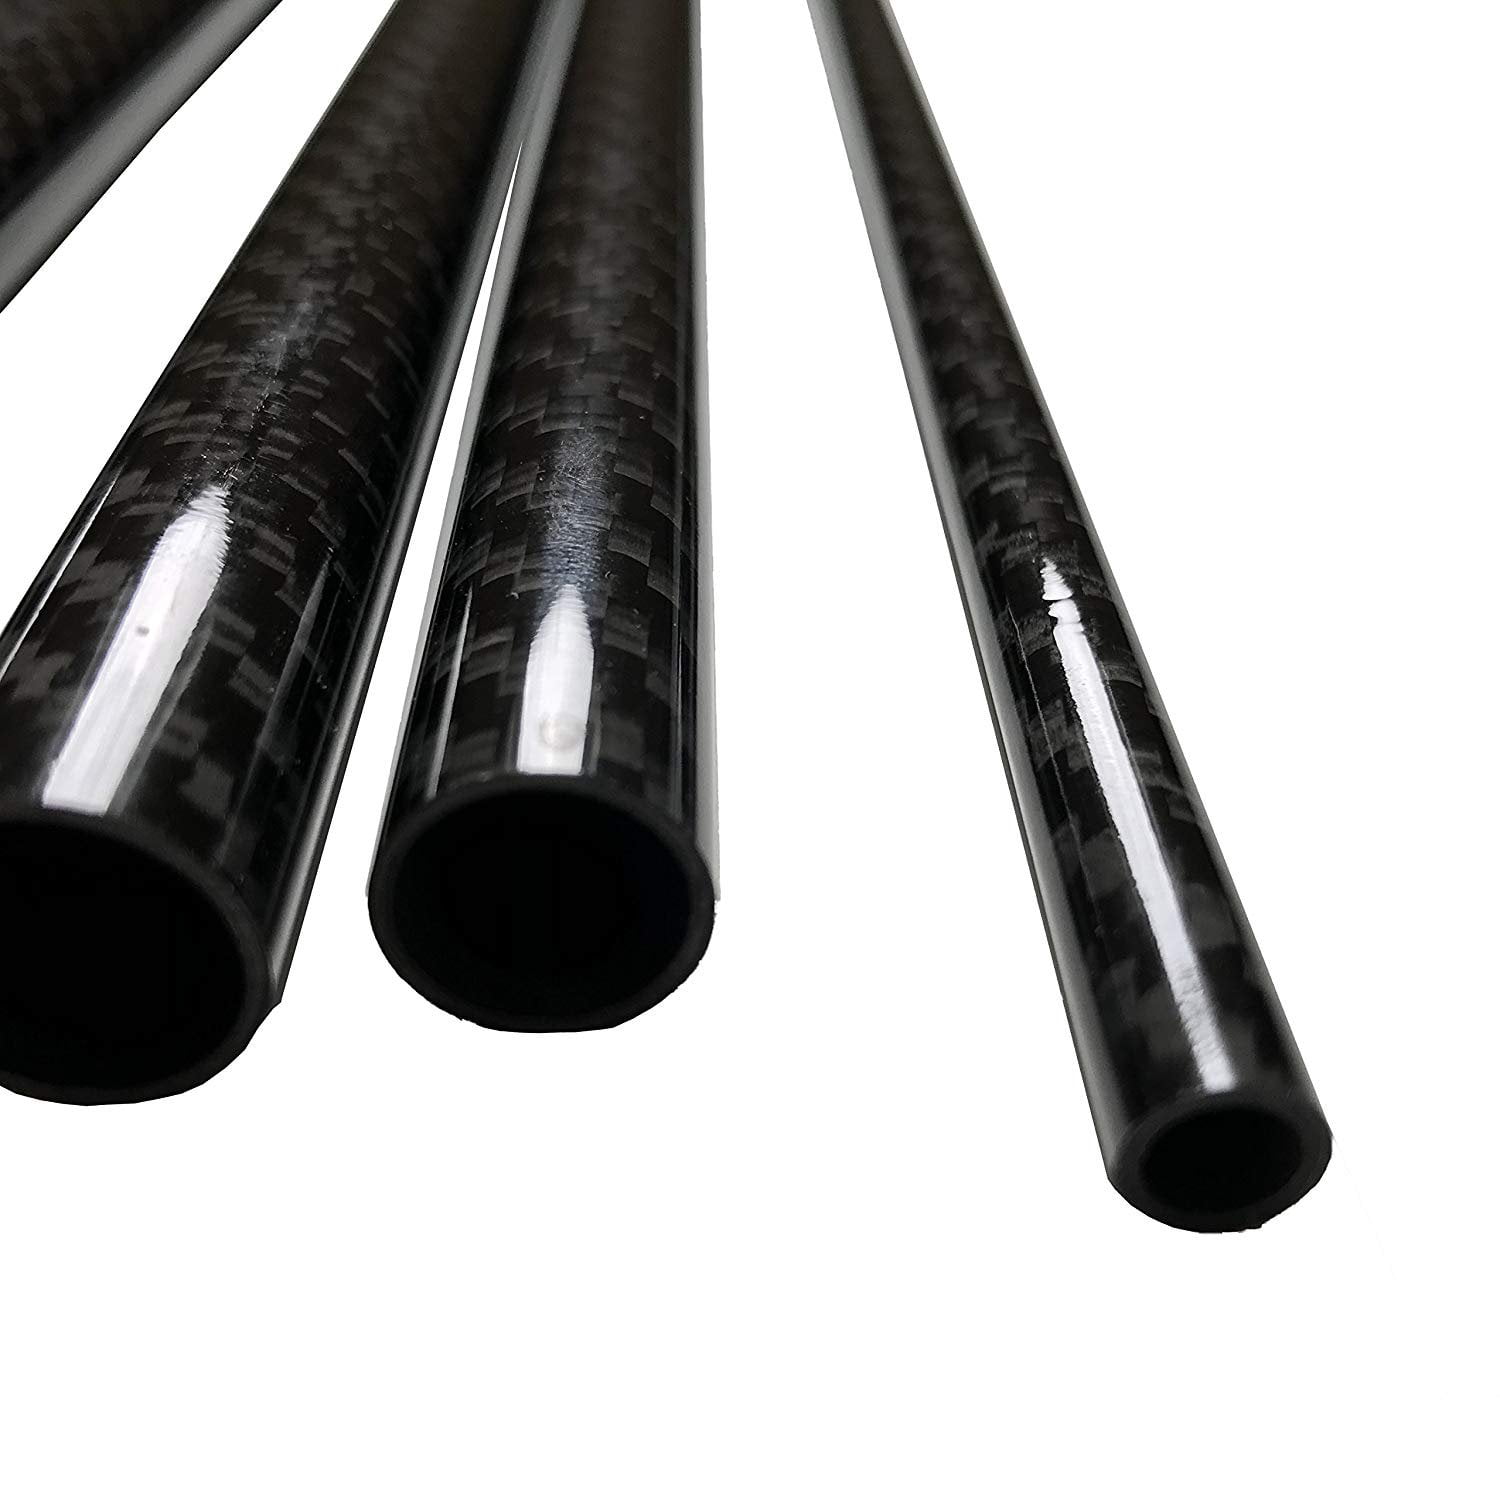 Carbon Fiber Tube 3K Roll Wrapped 100% Carbon Fiber Tube Glossy Surface 1 16mm x 14mm x 500mm 1 Tube 